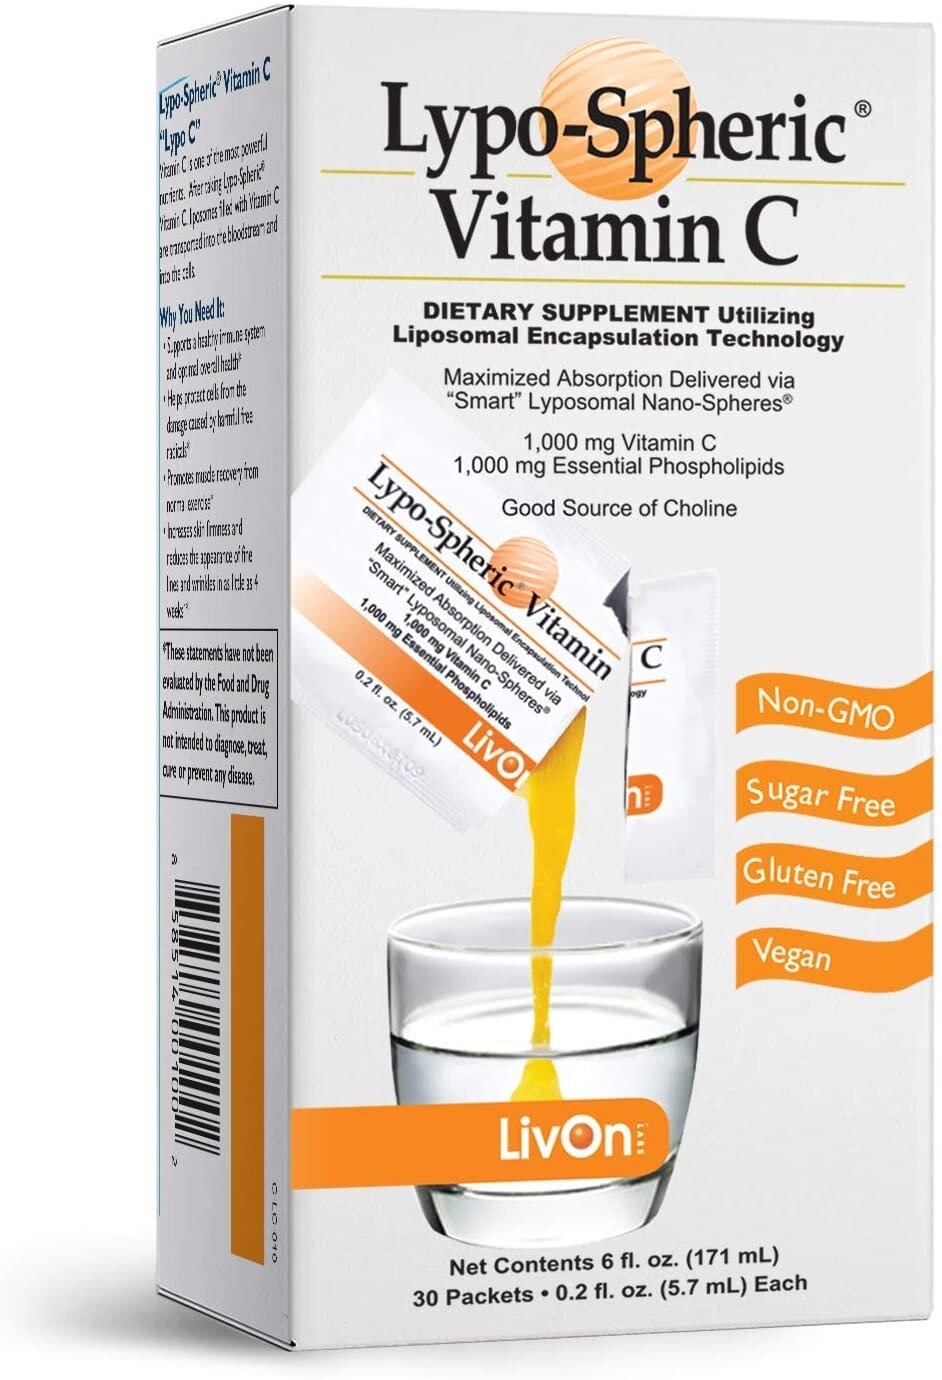 Lypo-spheric vitamin c